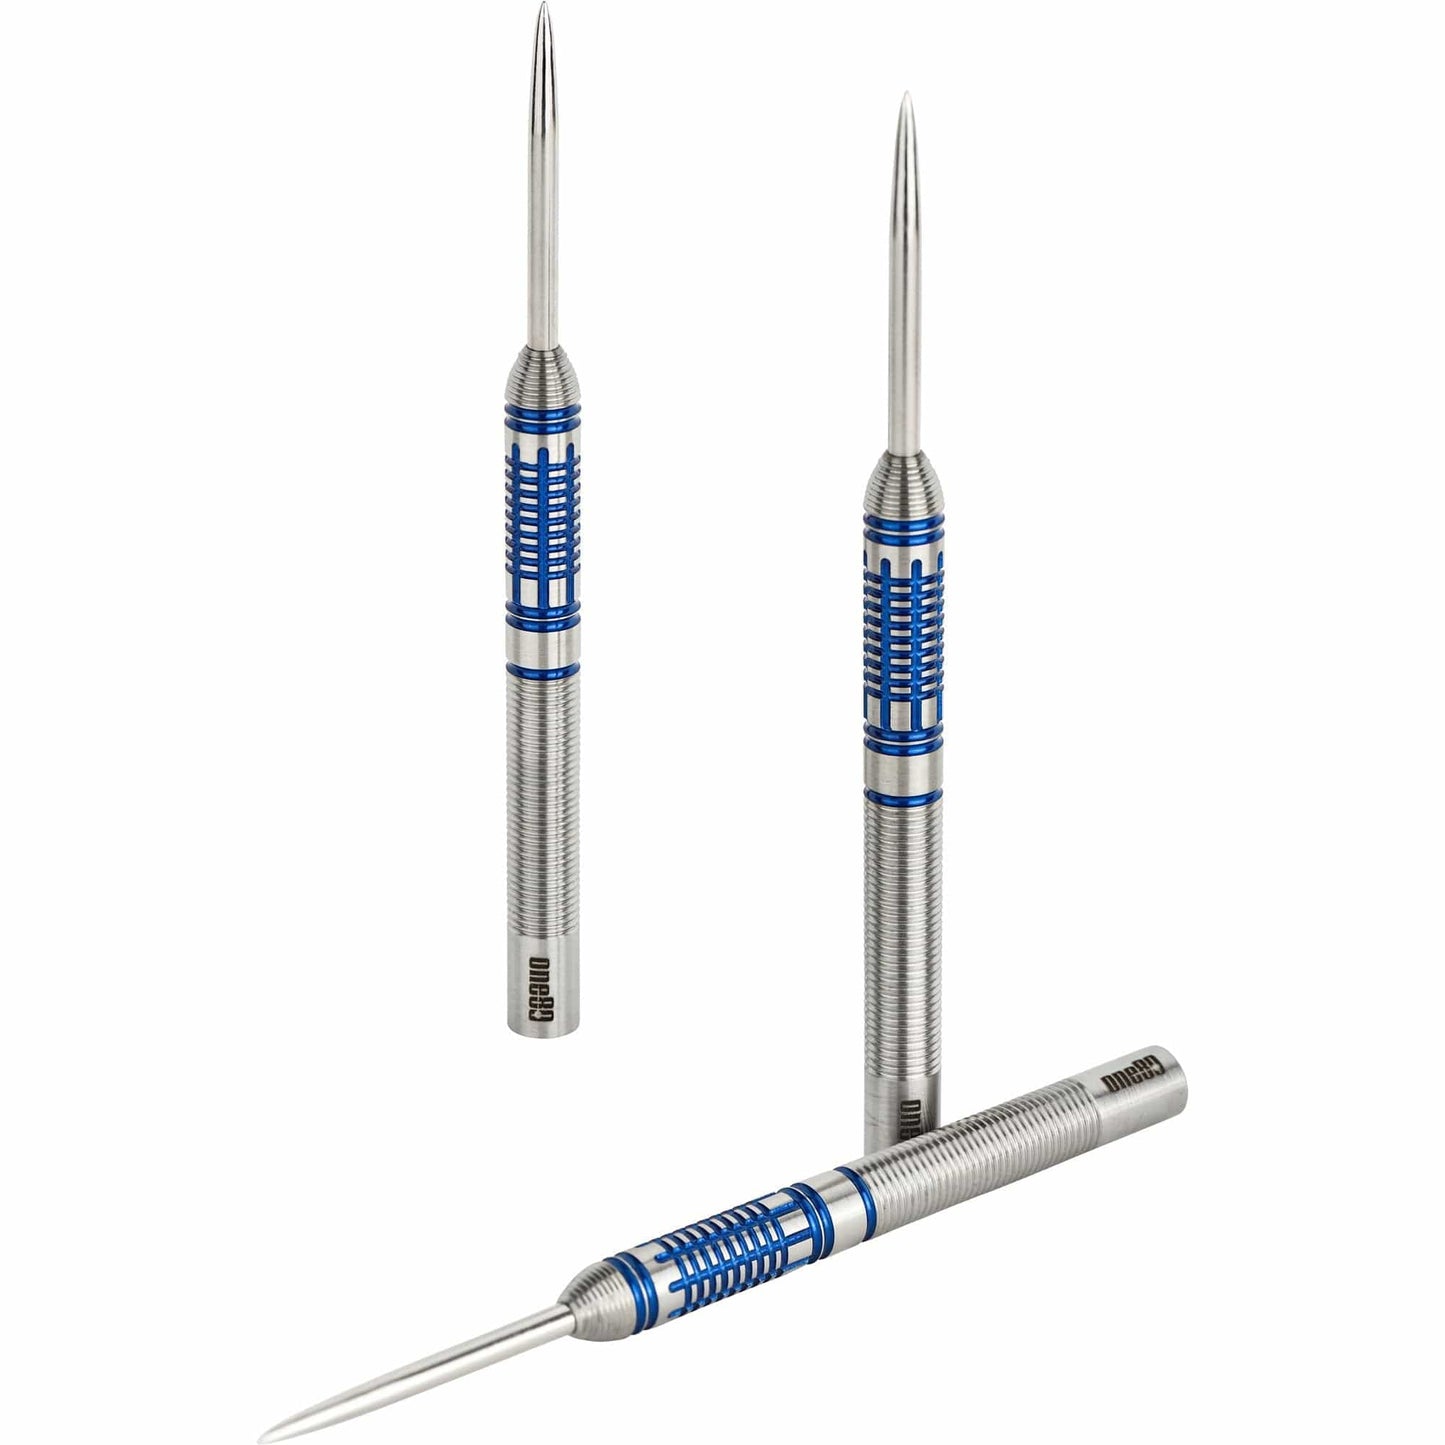 One80 Bavaria Ultra Long Darts - Steel Tip - S04 - Blue